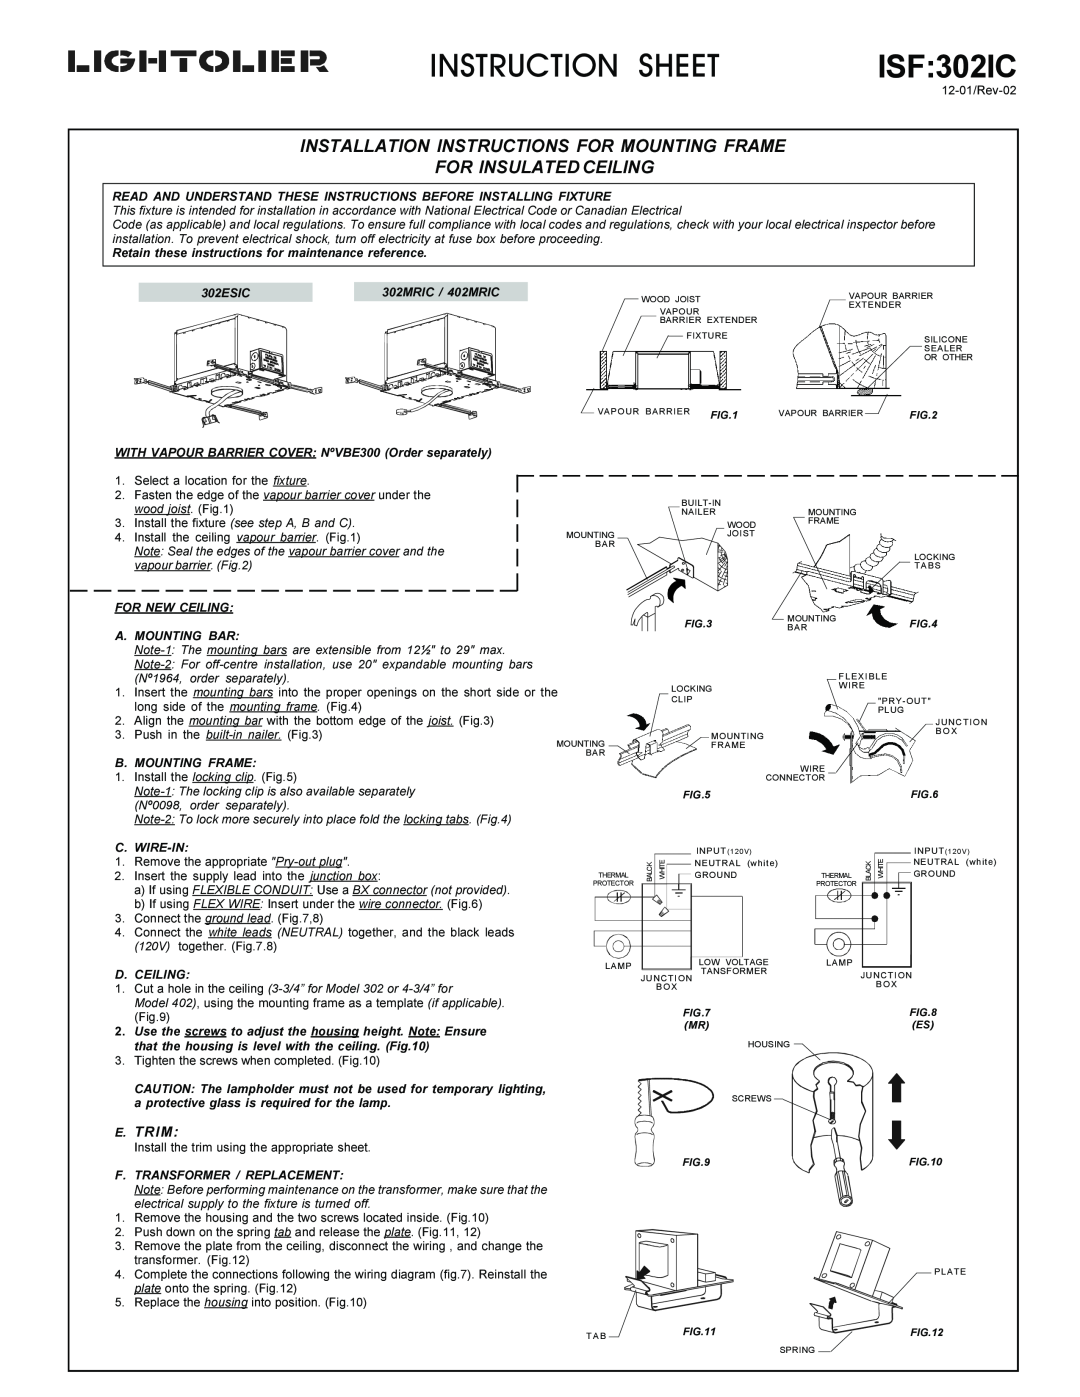 Lightolier IS:F302IC instruction sheet Instruction Sheet, ISF 302IC, Installation Instructions For Mounting Frame, E.Trim 